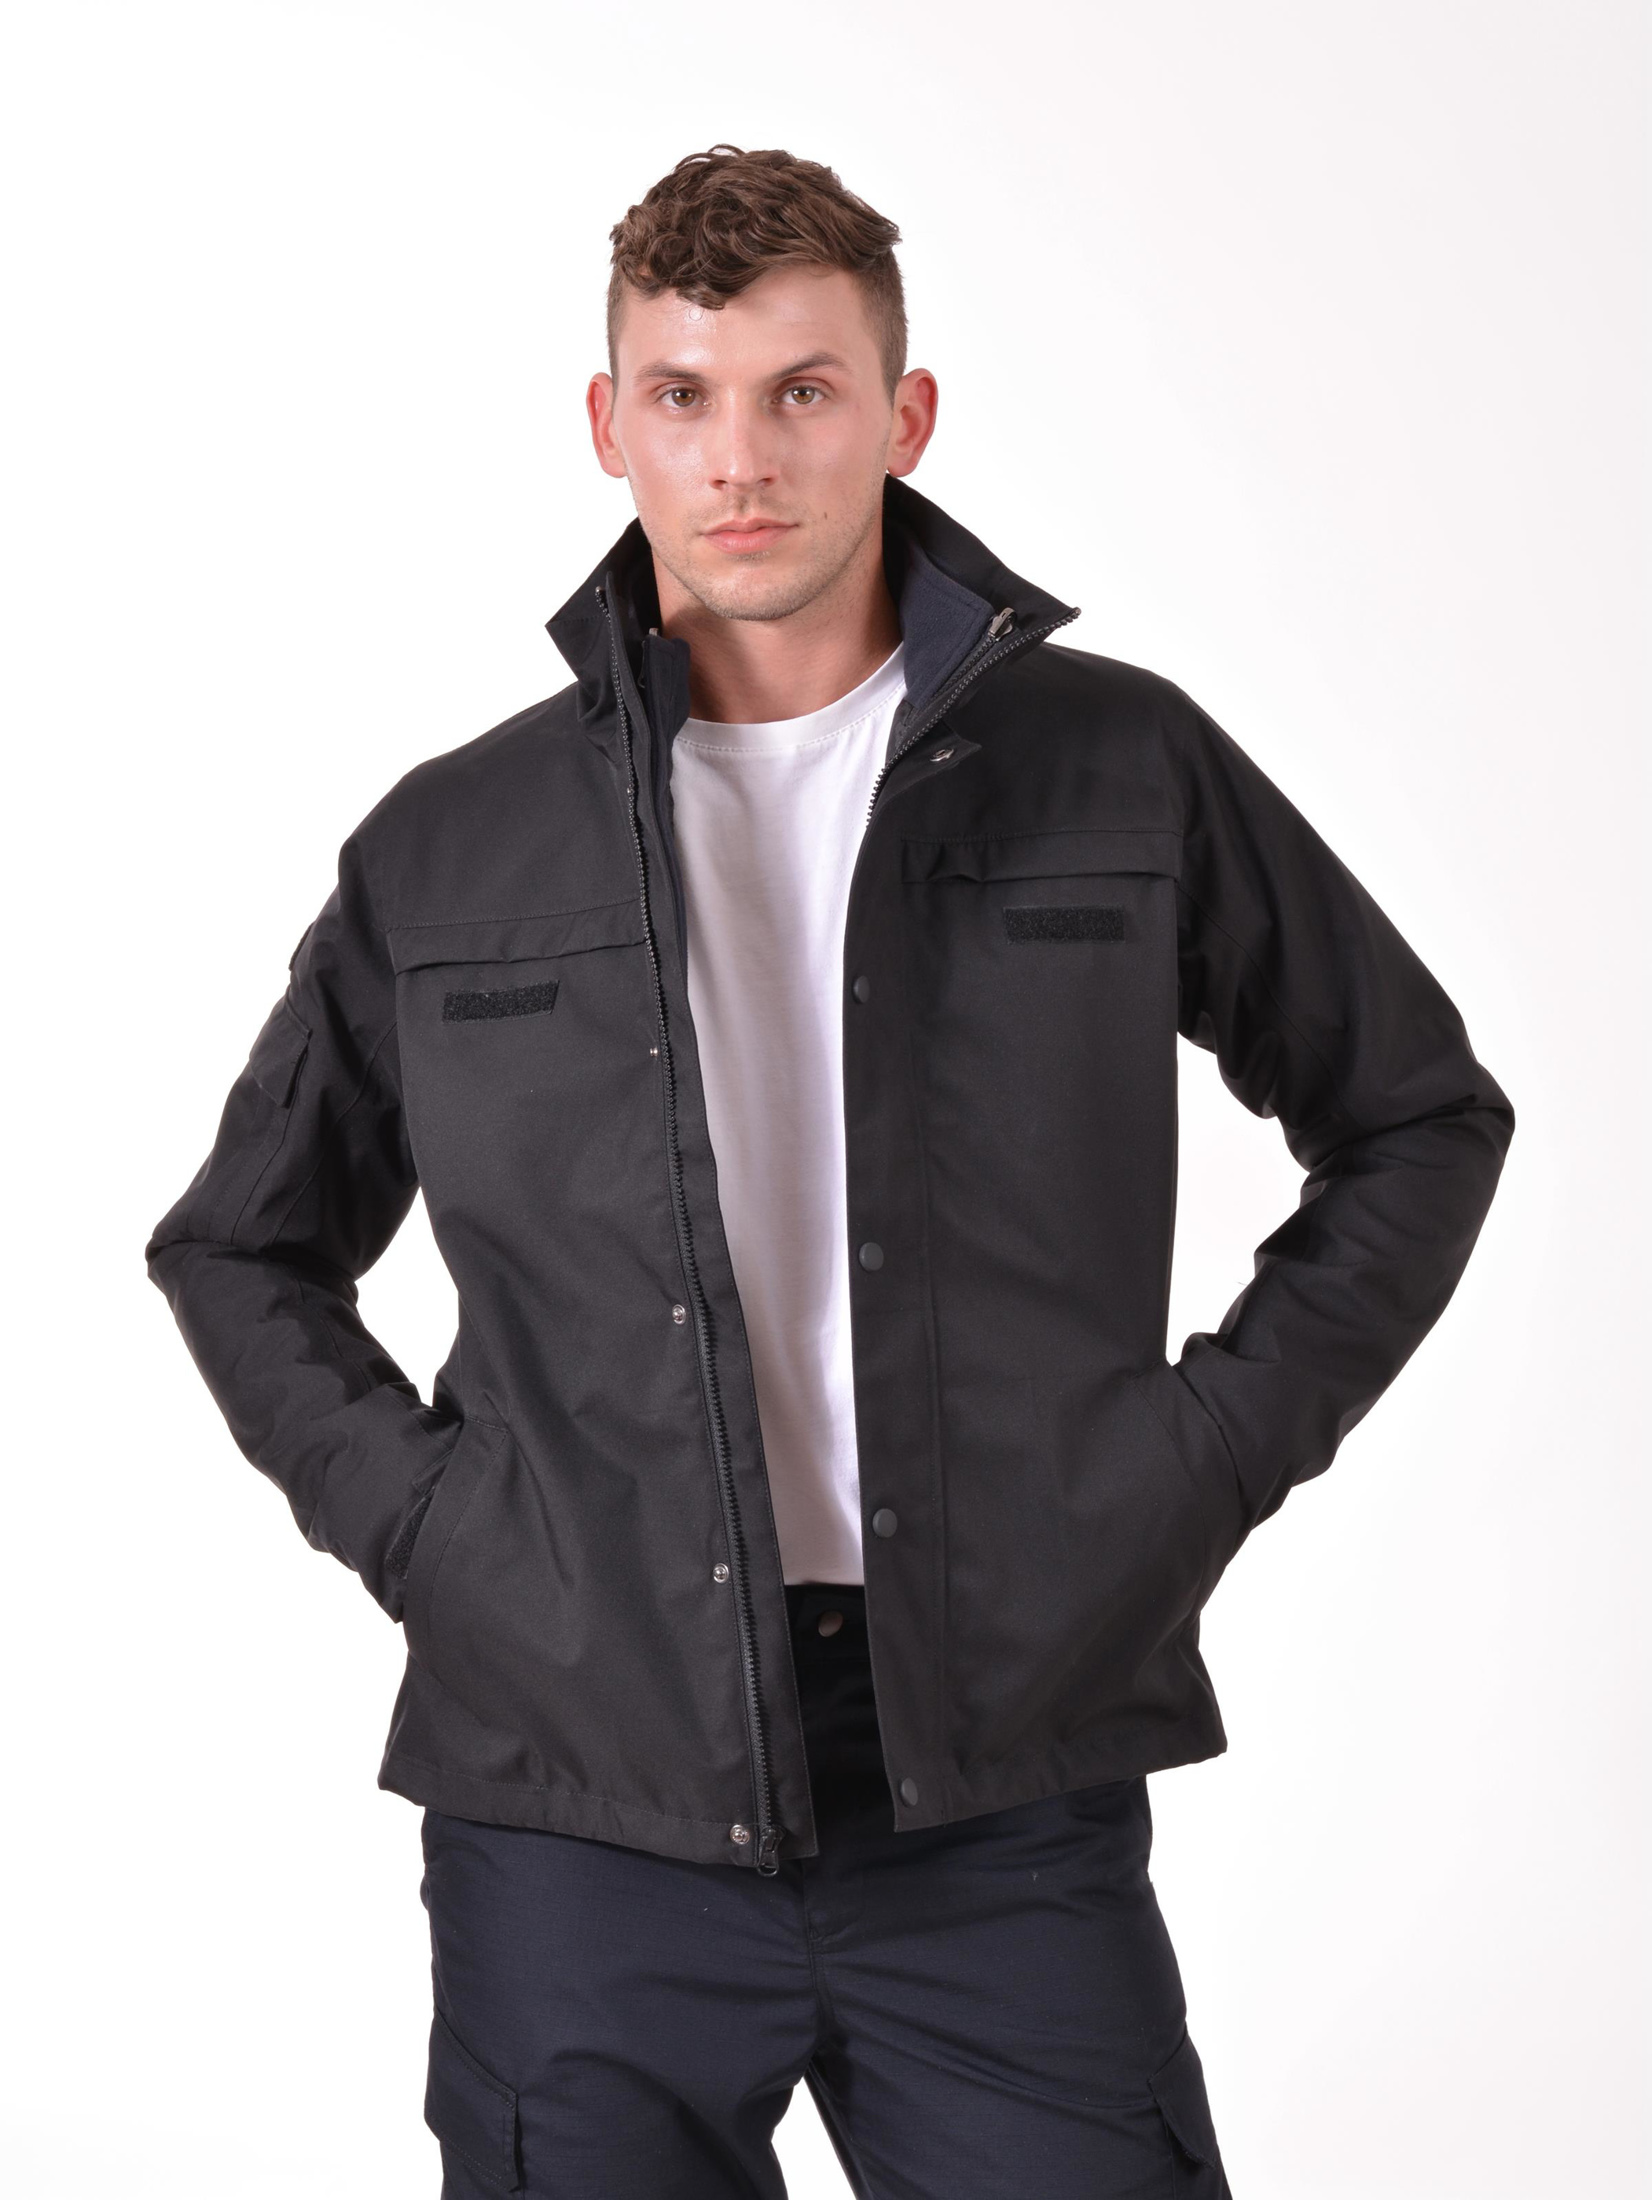 men's jacket 3u1, hardshell, underjacket dettachable, muška jakna 3u1, hardshell, podjakna